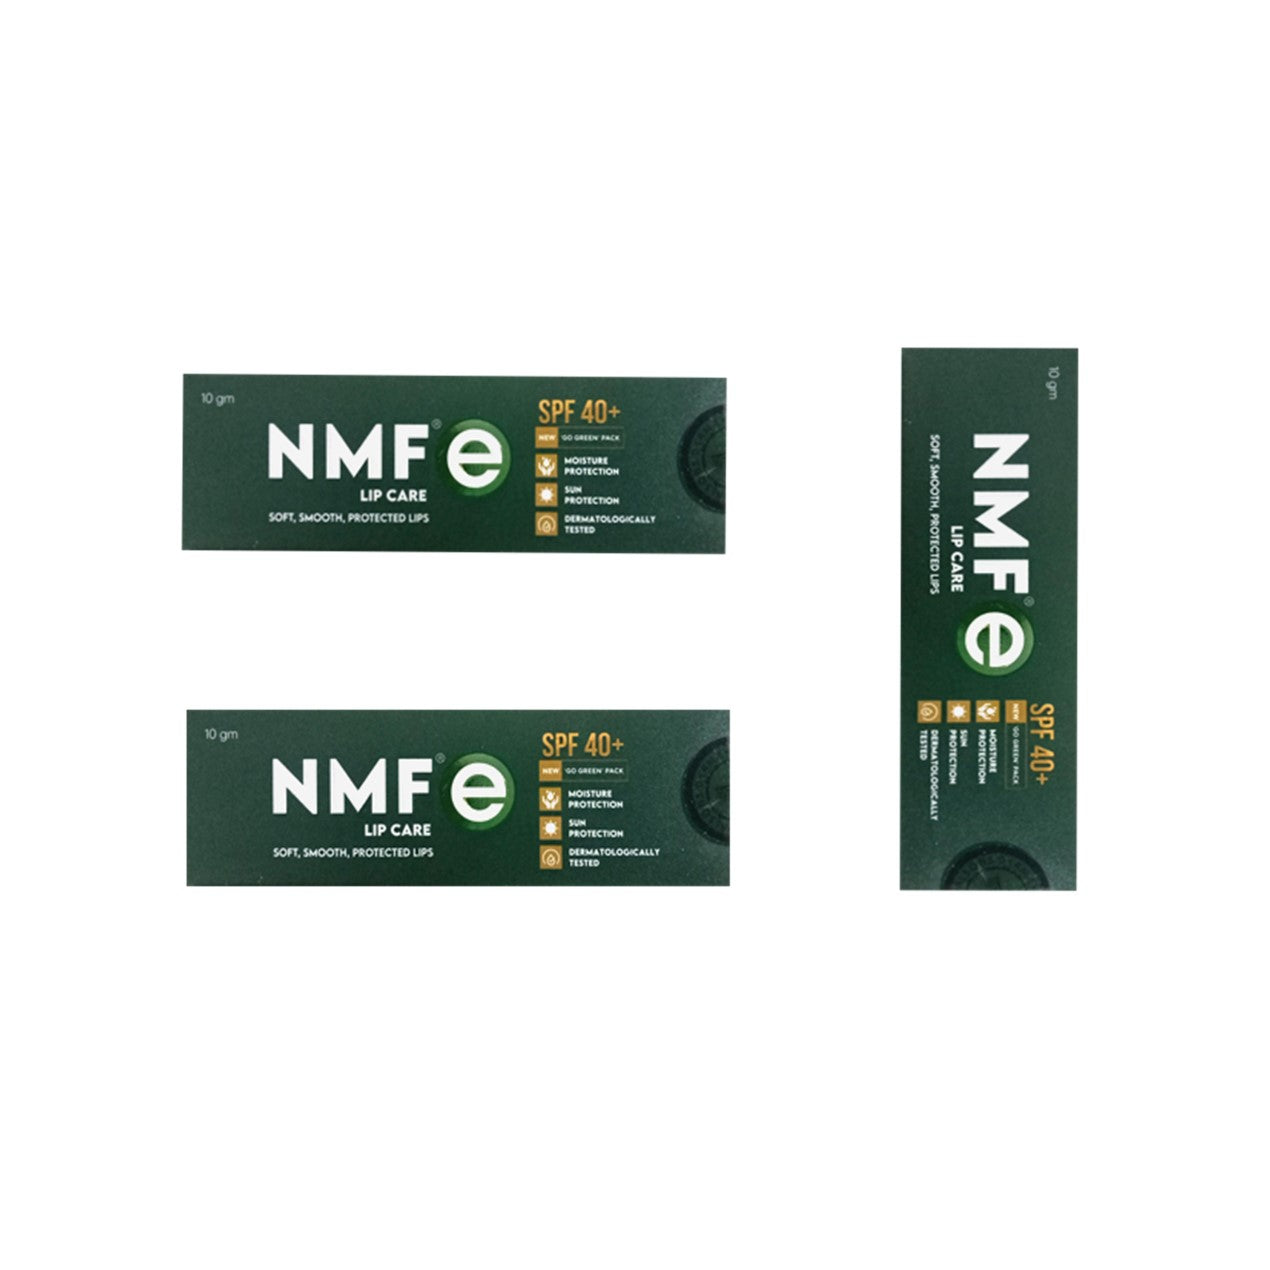 NMFe Lip Care spf 40+ (10GM) (PACK OF 3)